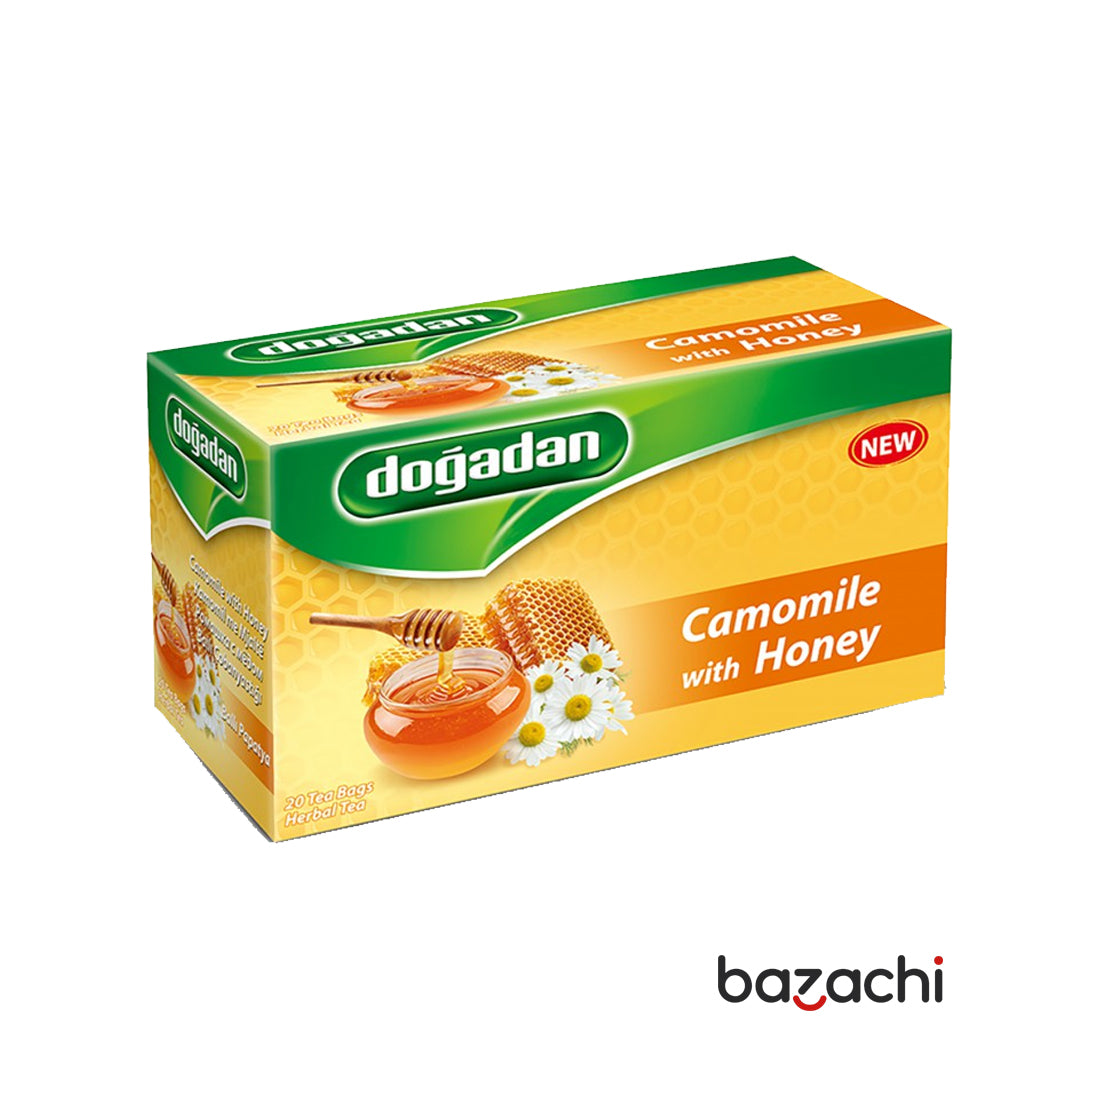 Dogadan Chamomile with Honey Tea -Balli Papatya Cay 20 Tea Bags